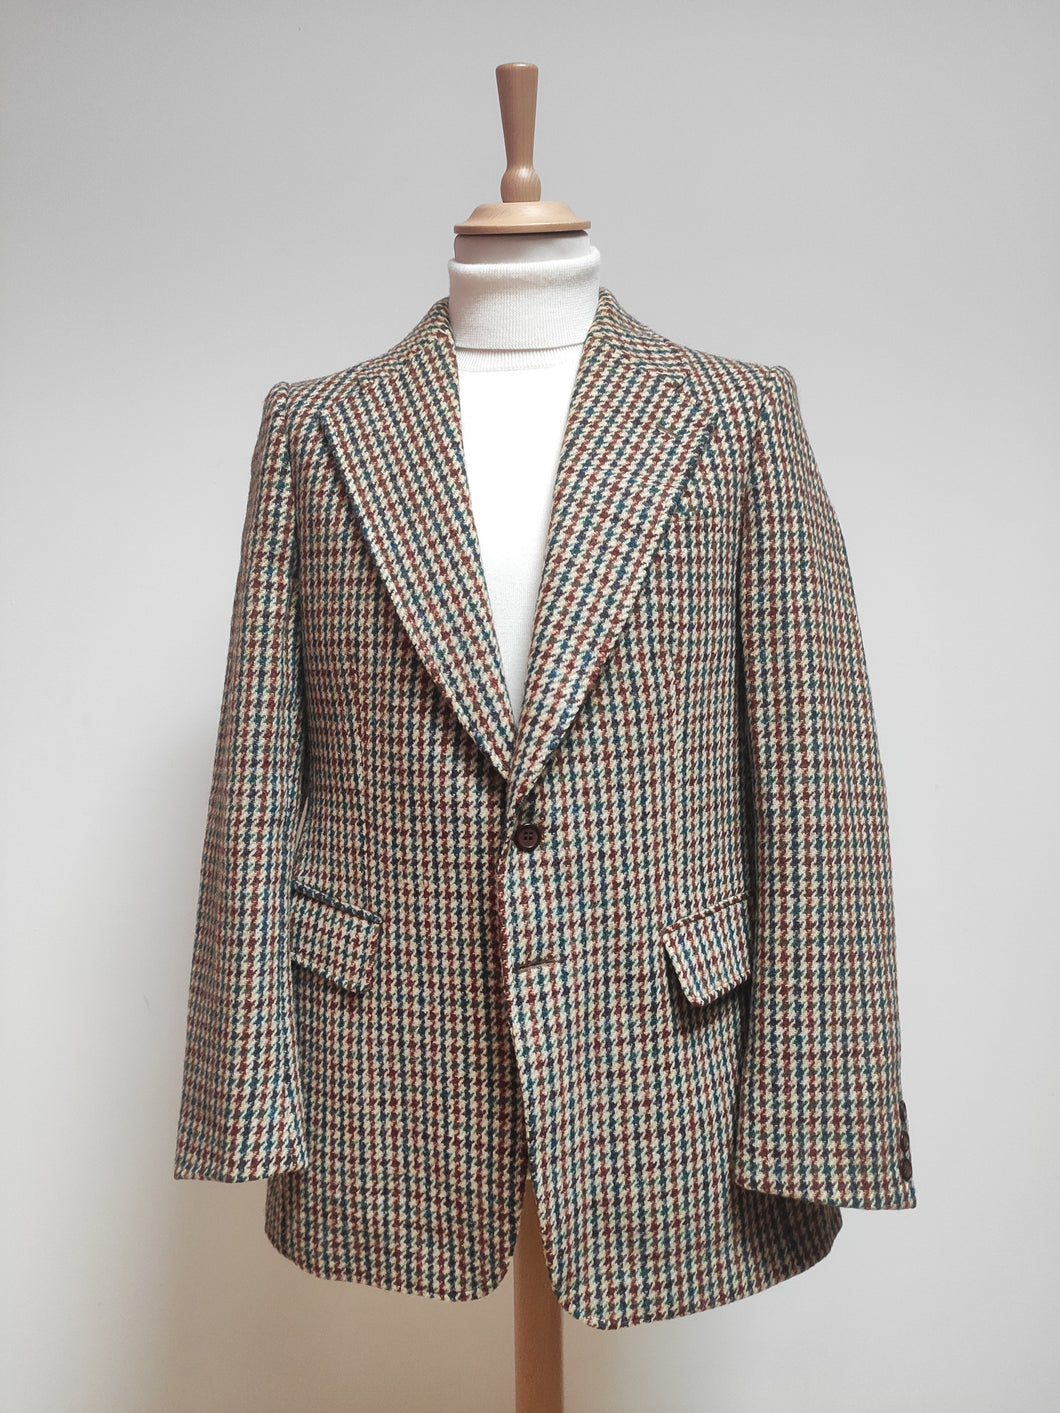 Harris Tweed blazer vintage tweed pied de coq en pure laine vierge L